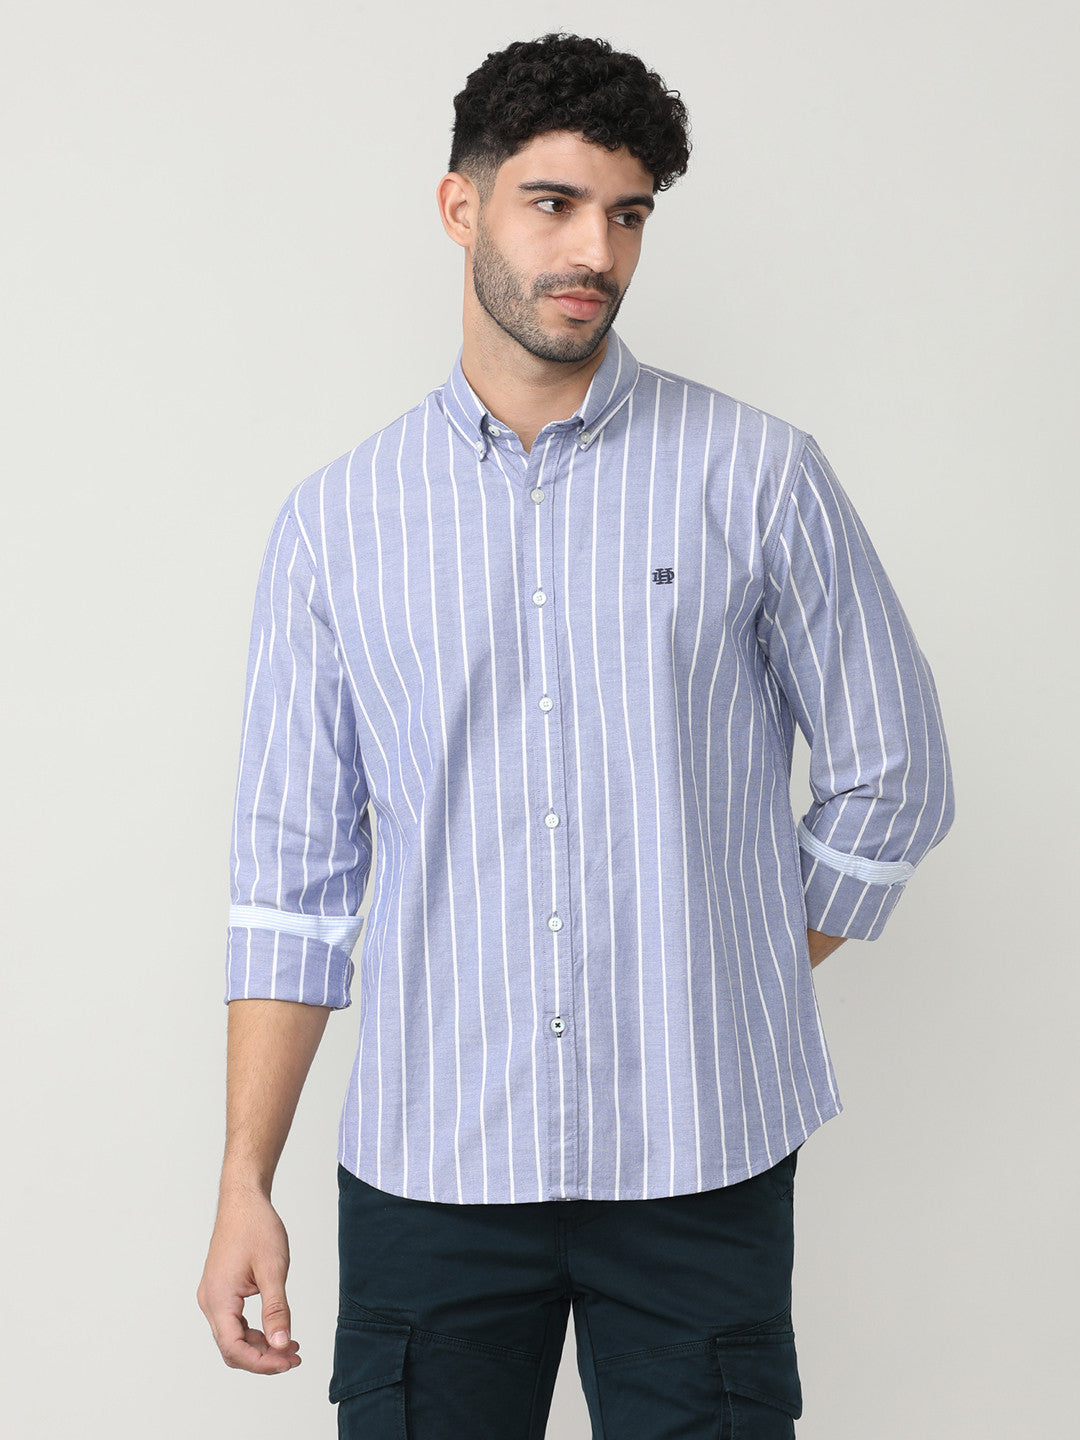 Aqua Oxford Verticle Stripes Checks Shirt With Button Down Collar